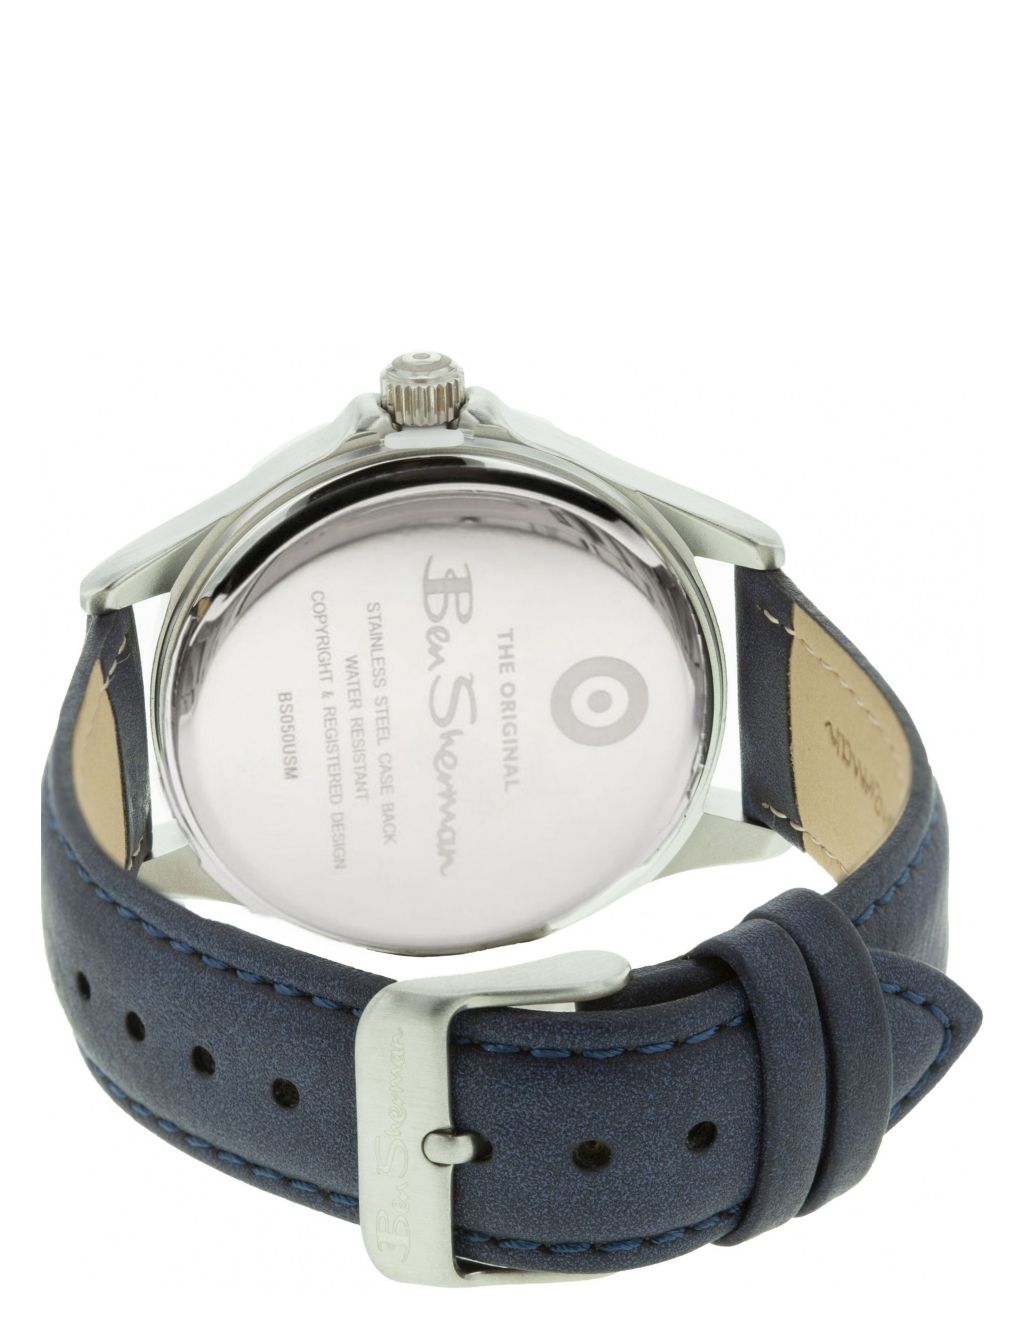 Ben Sherman Navy Faux Leather Quartz Watch image 2